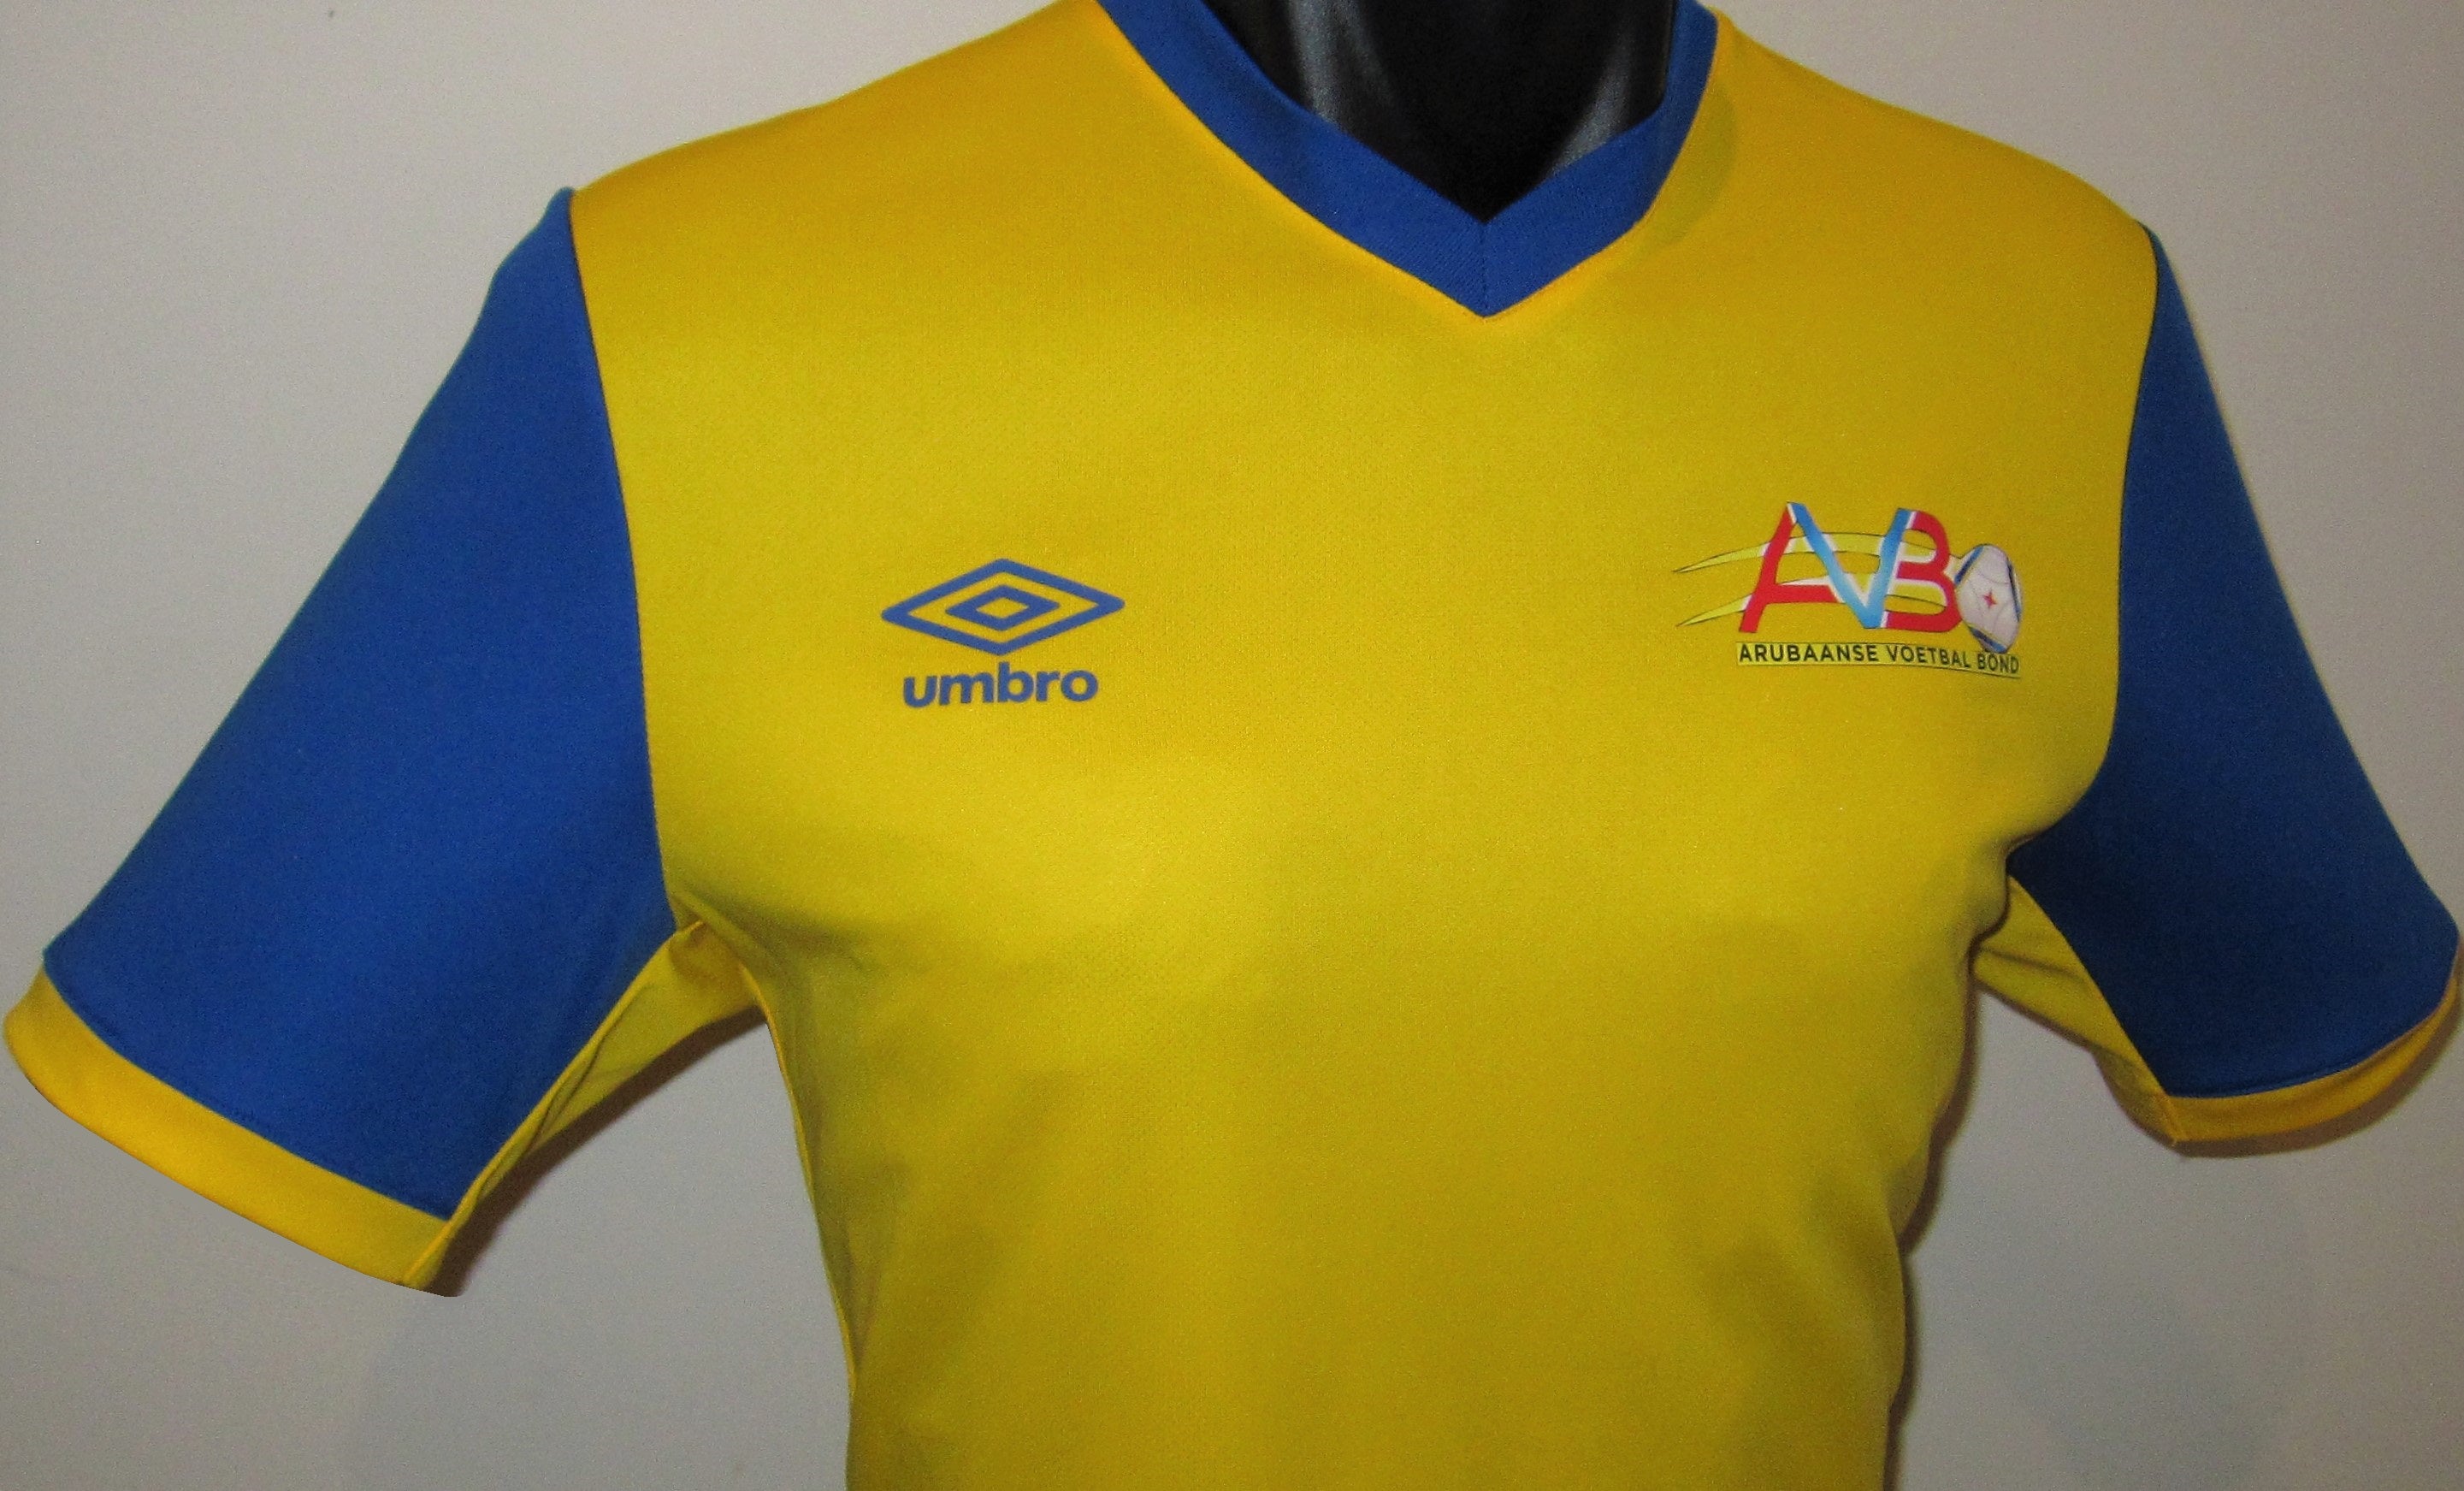 Aruba 2019 Home Jersey/Shirt